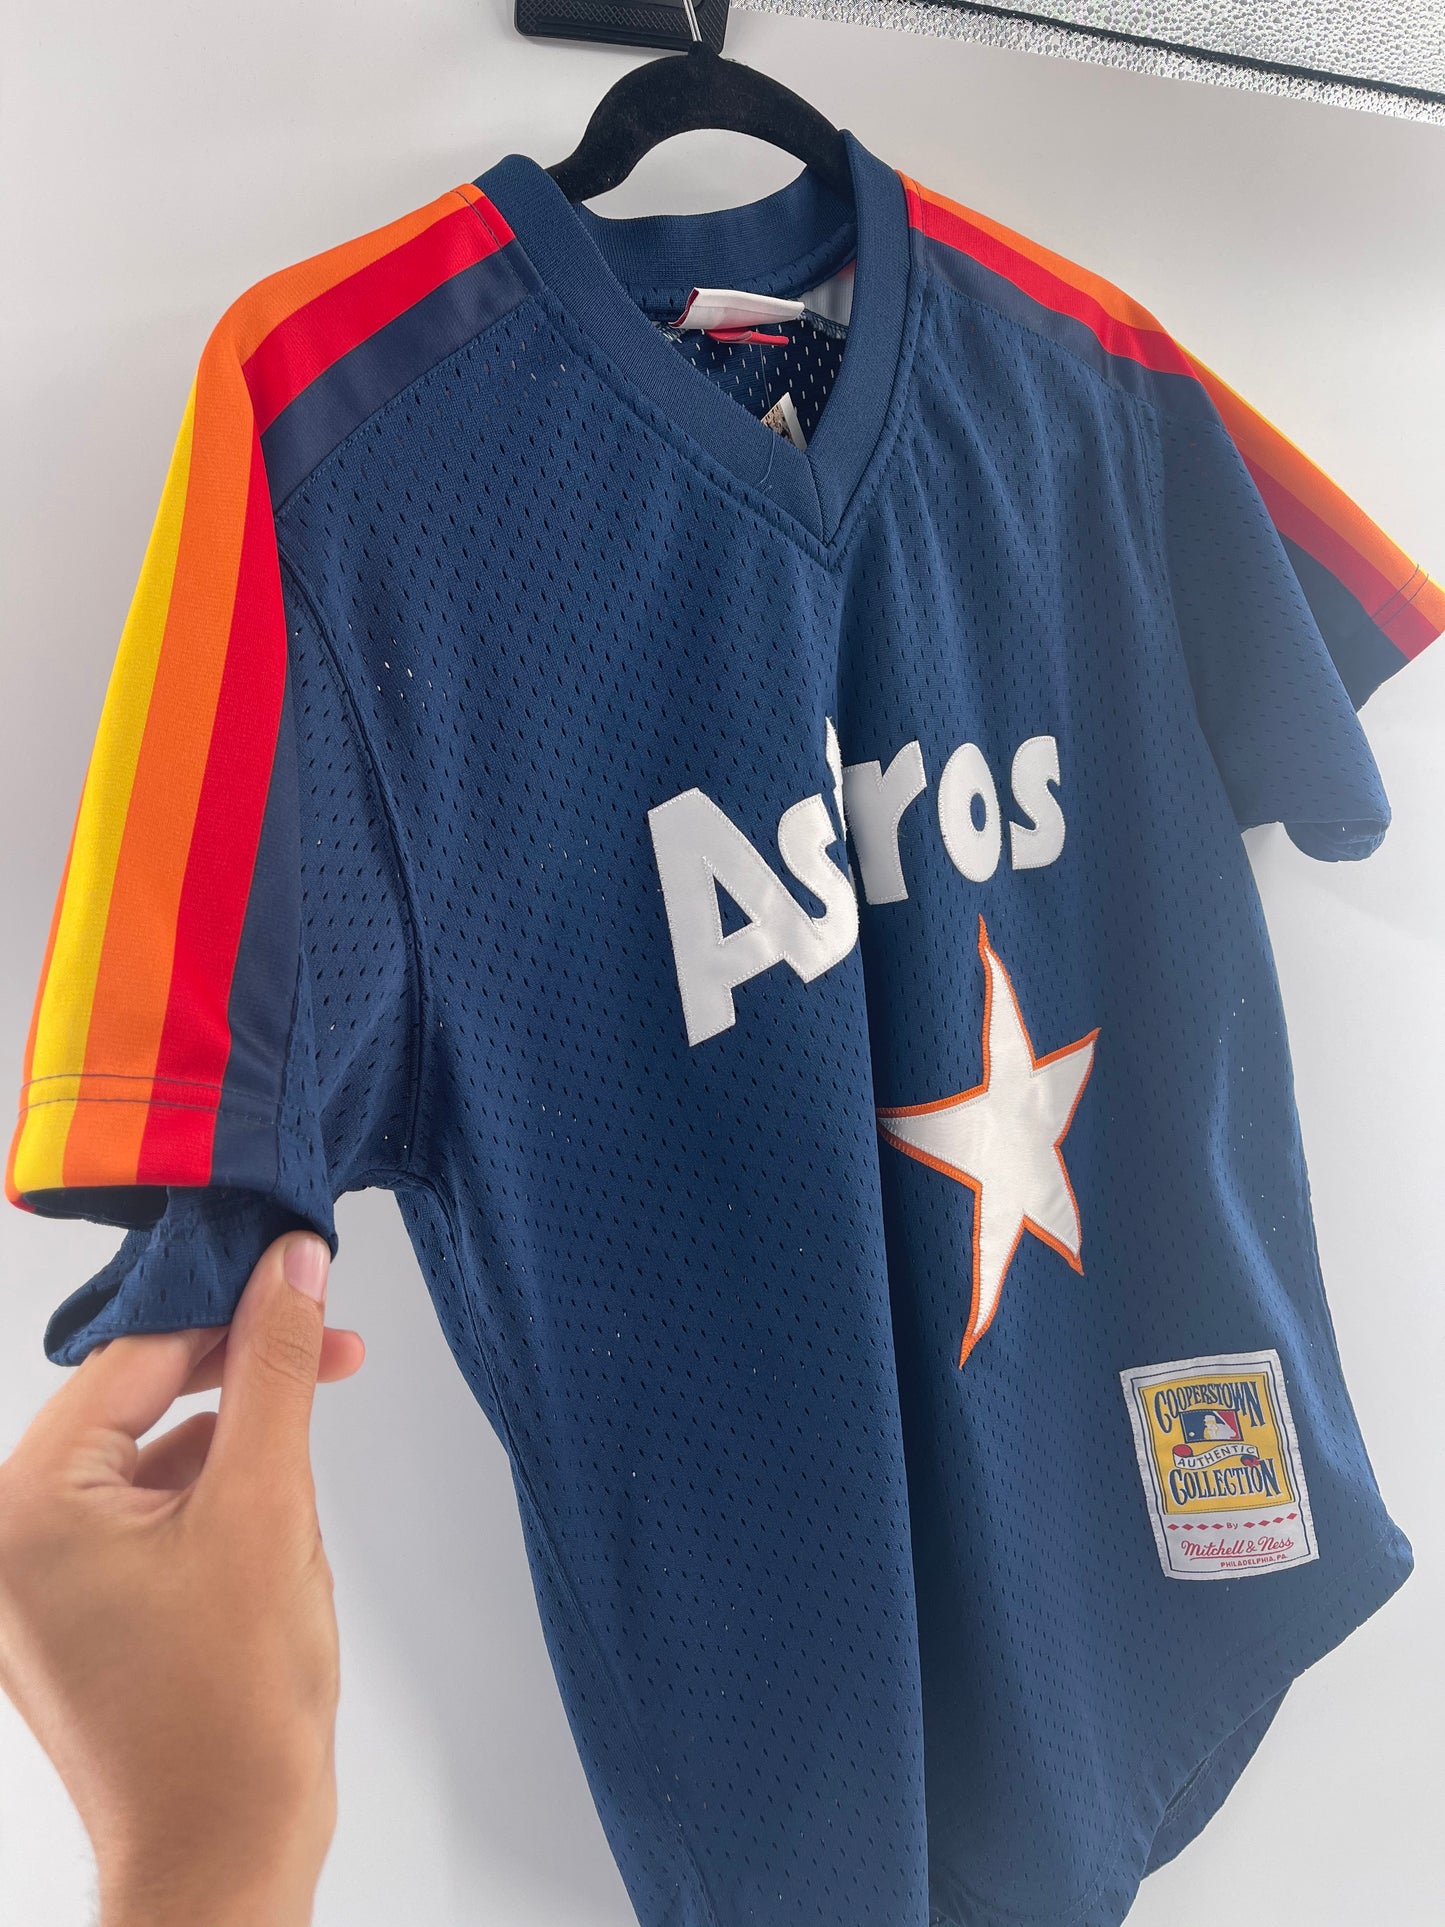 Vintage Mitchell + Ness Astros Jersey